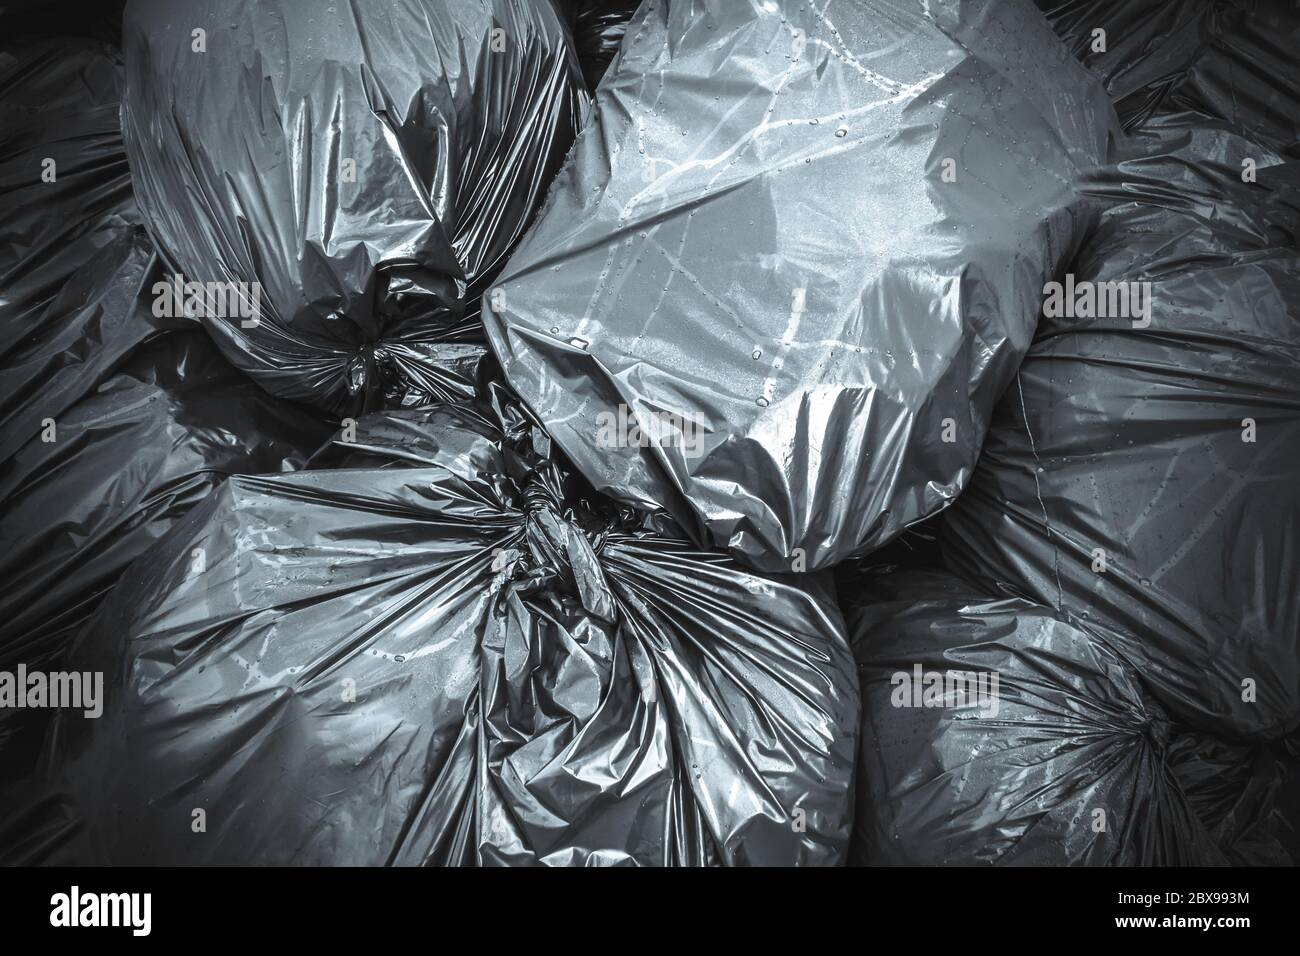 Müllsäcke. Abfall, schwarze Müllsäcke Plastikstapel. Viele Müllsäcke  stapeln sich Stockfotografie - Alamy